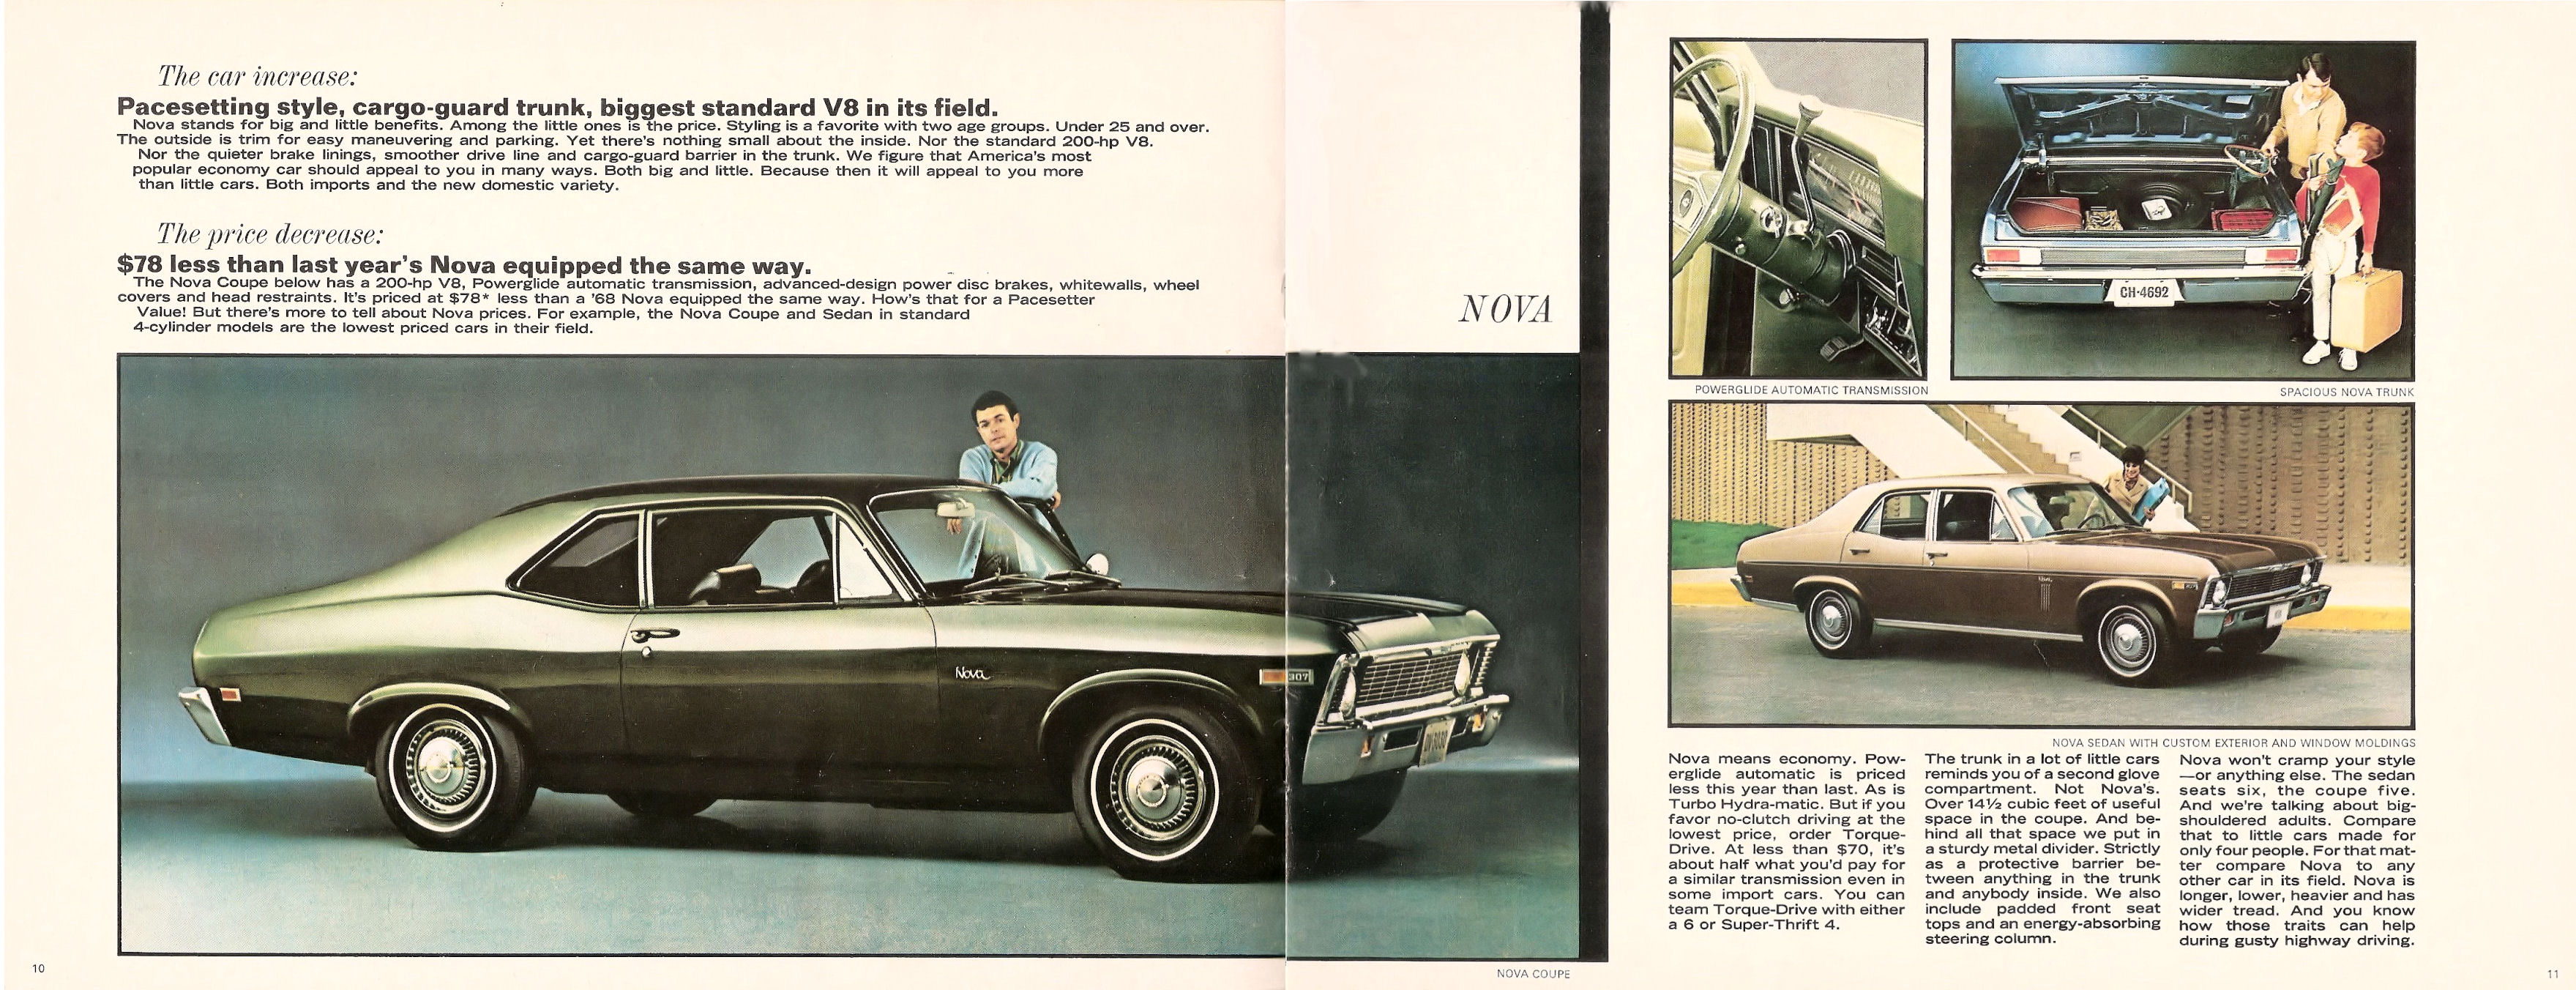 1969_Chevrolet_Pacesetter_Values_Mailer-10-11